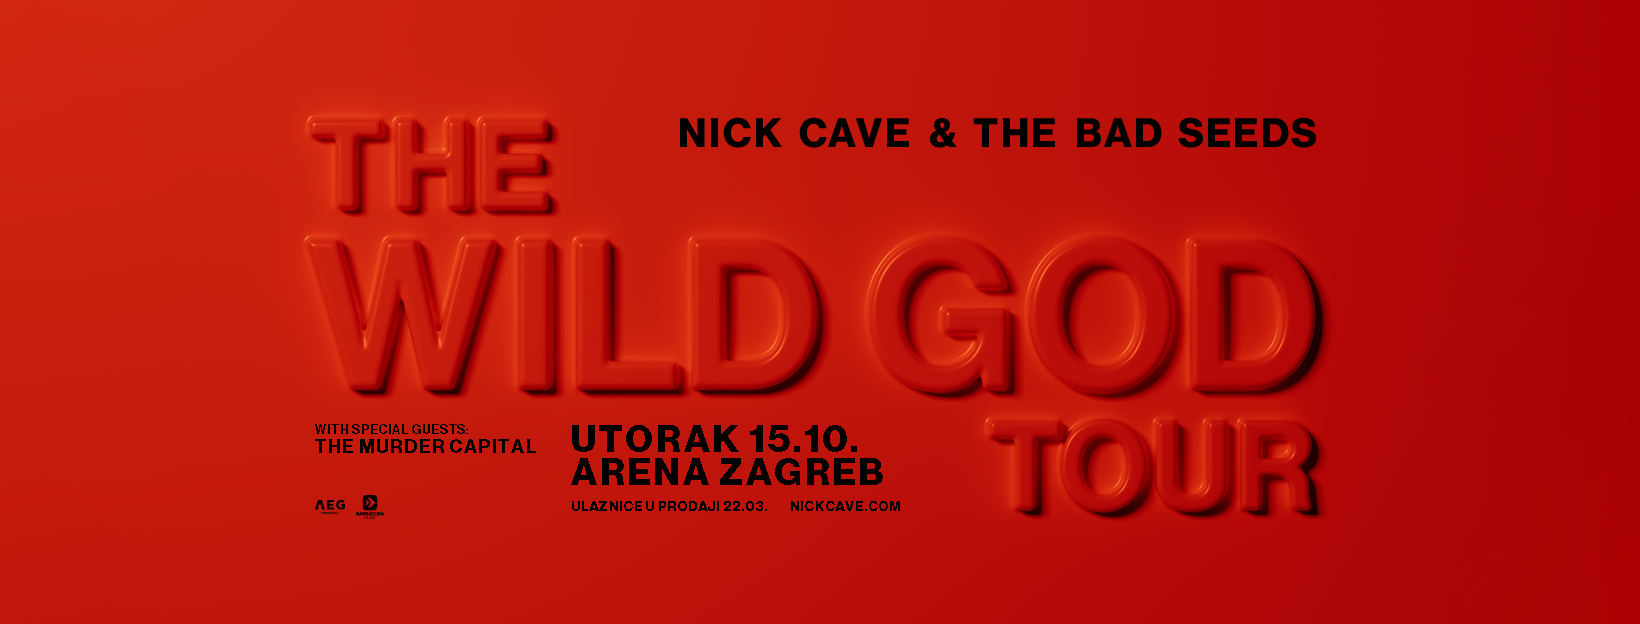 Nick Cave & The Bad Seeds - Arena Zagreb